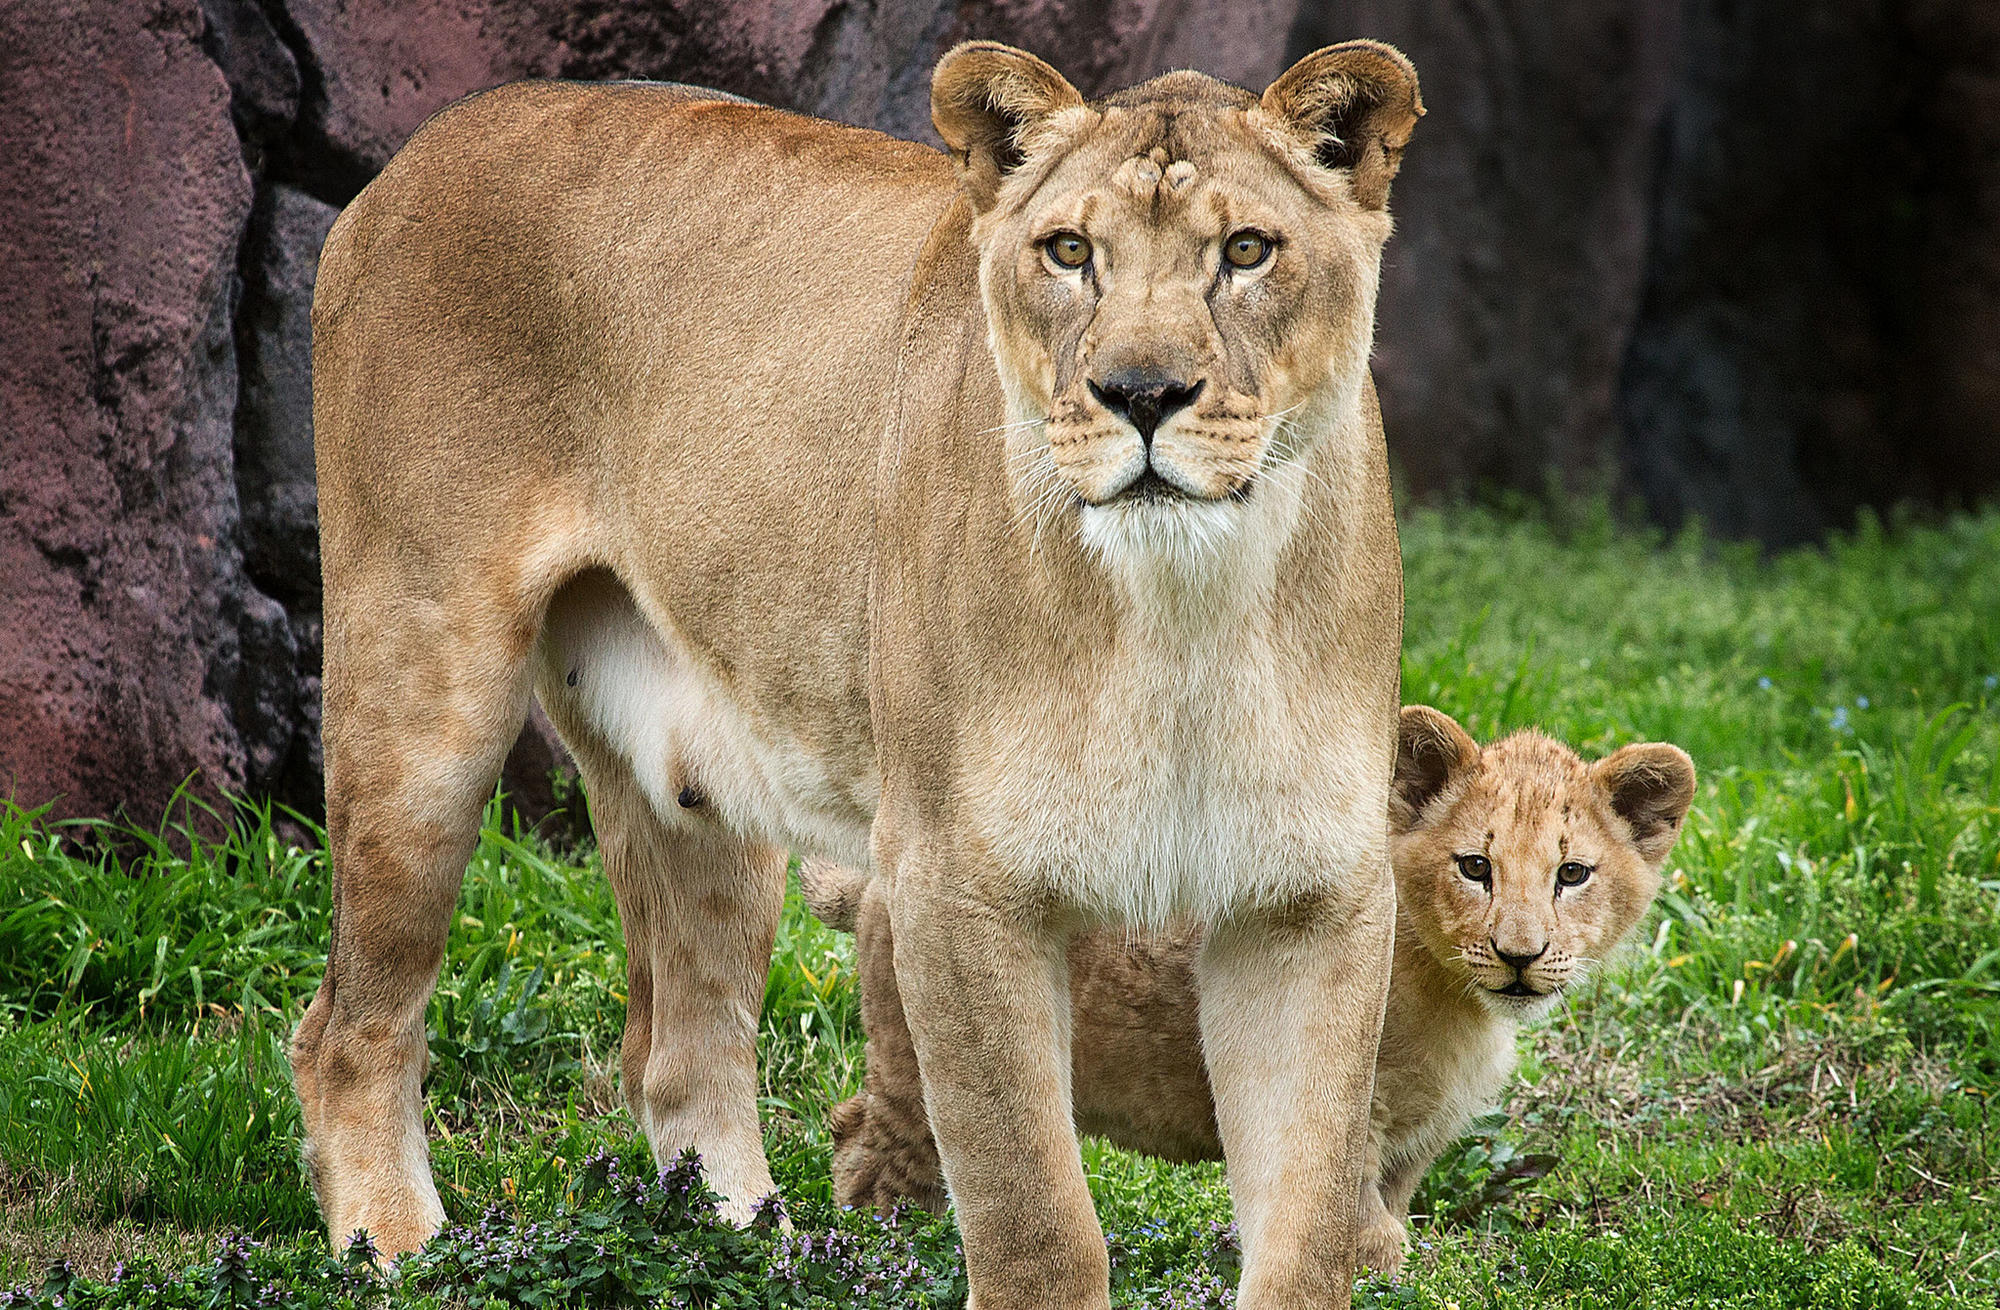 Virginia Zoo's lion cub explores new outdoor home - Daily Press